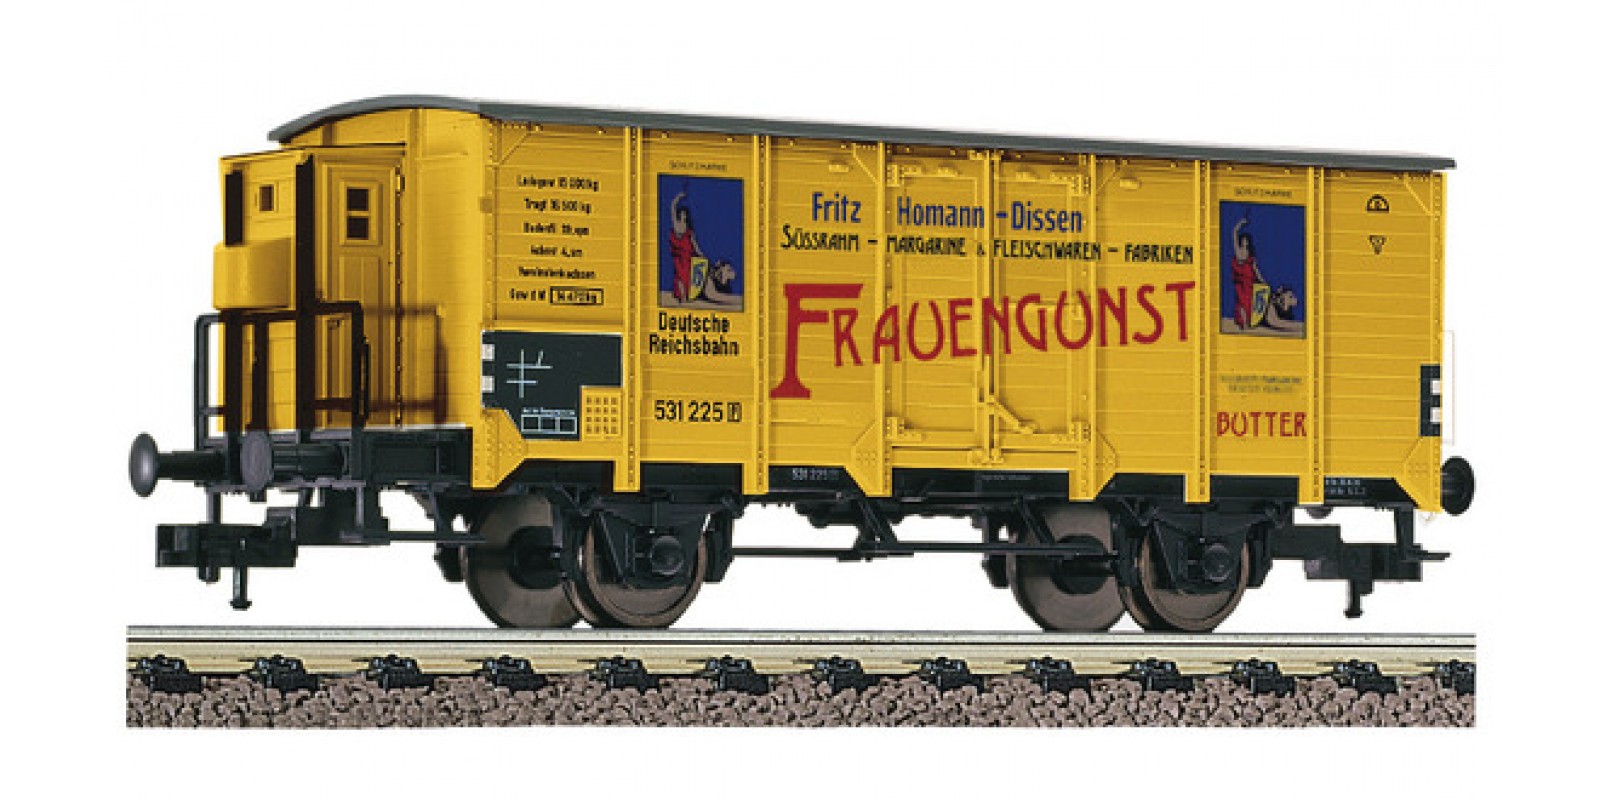 FL534805 - Refrigerated wagon "Homann-Frauengunst", DRG